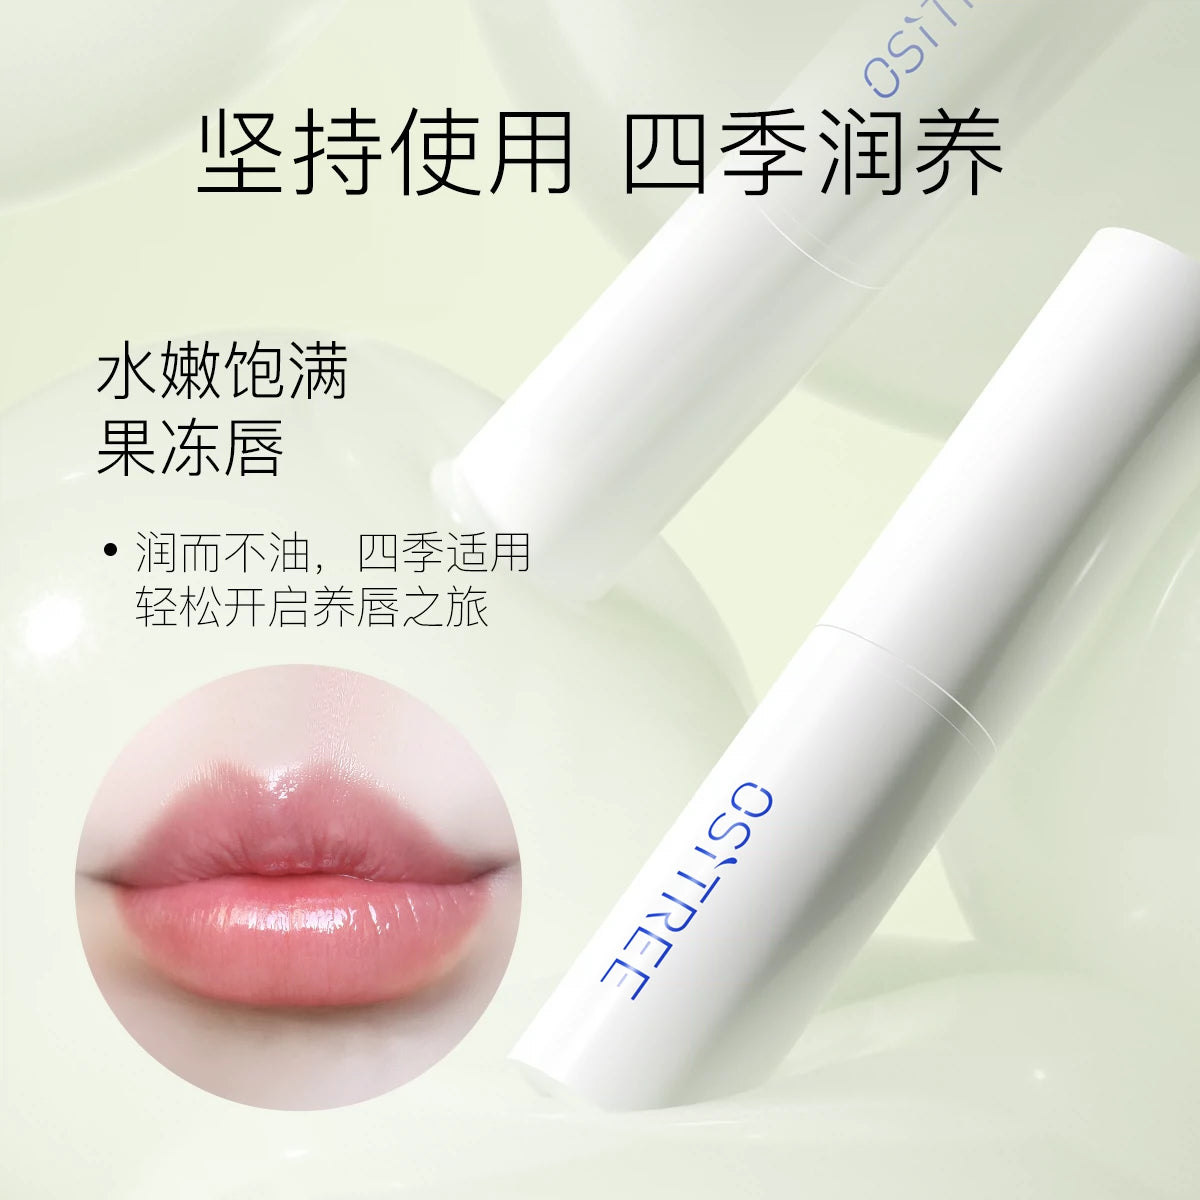 Ositree Moisturizing Hydrating Lip Balm 3.5g 柳丝木保湿补水唇膏